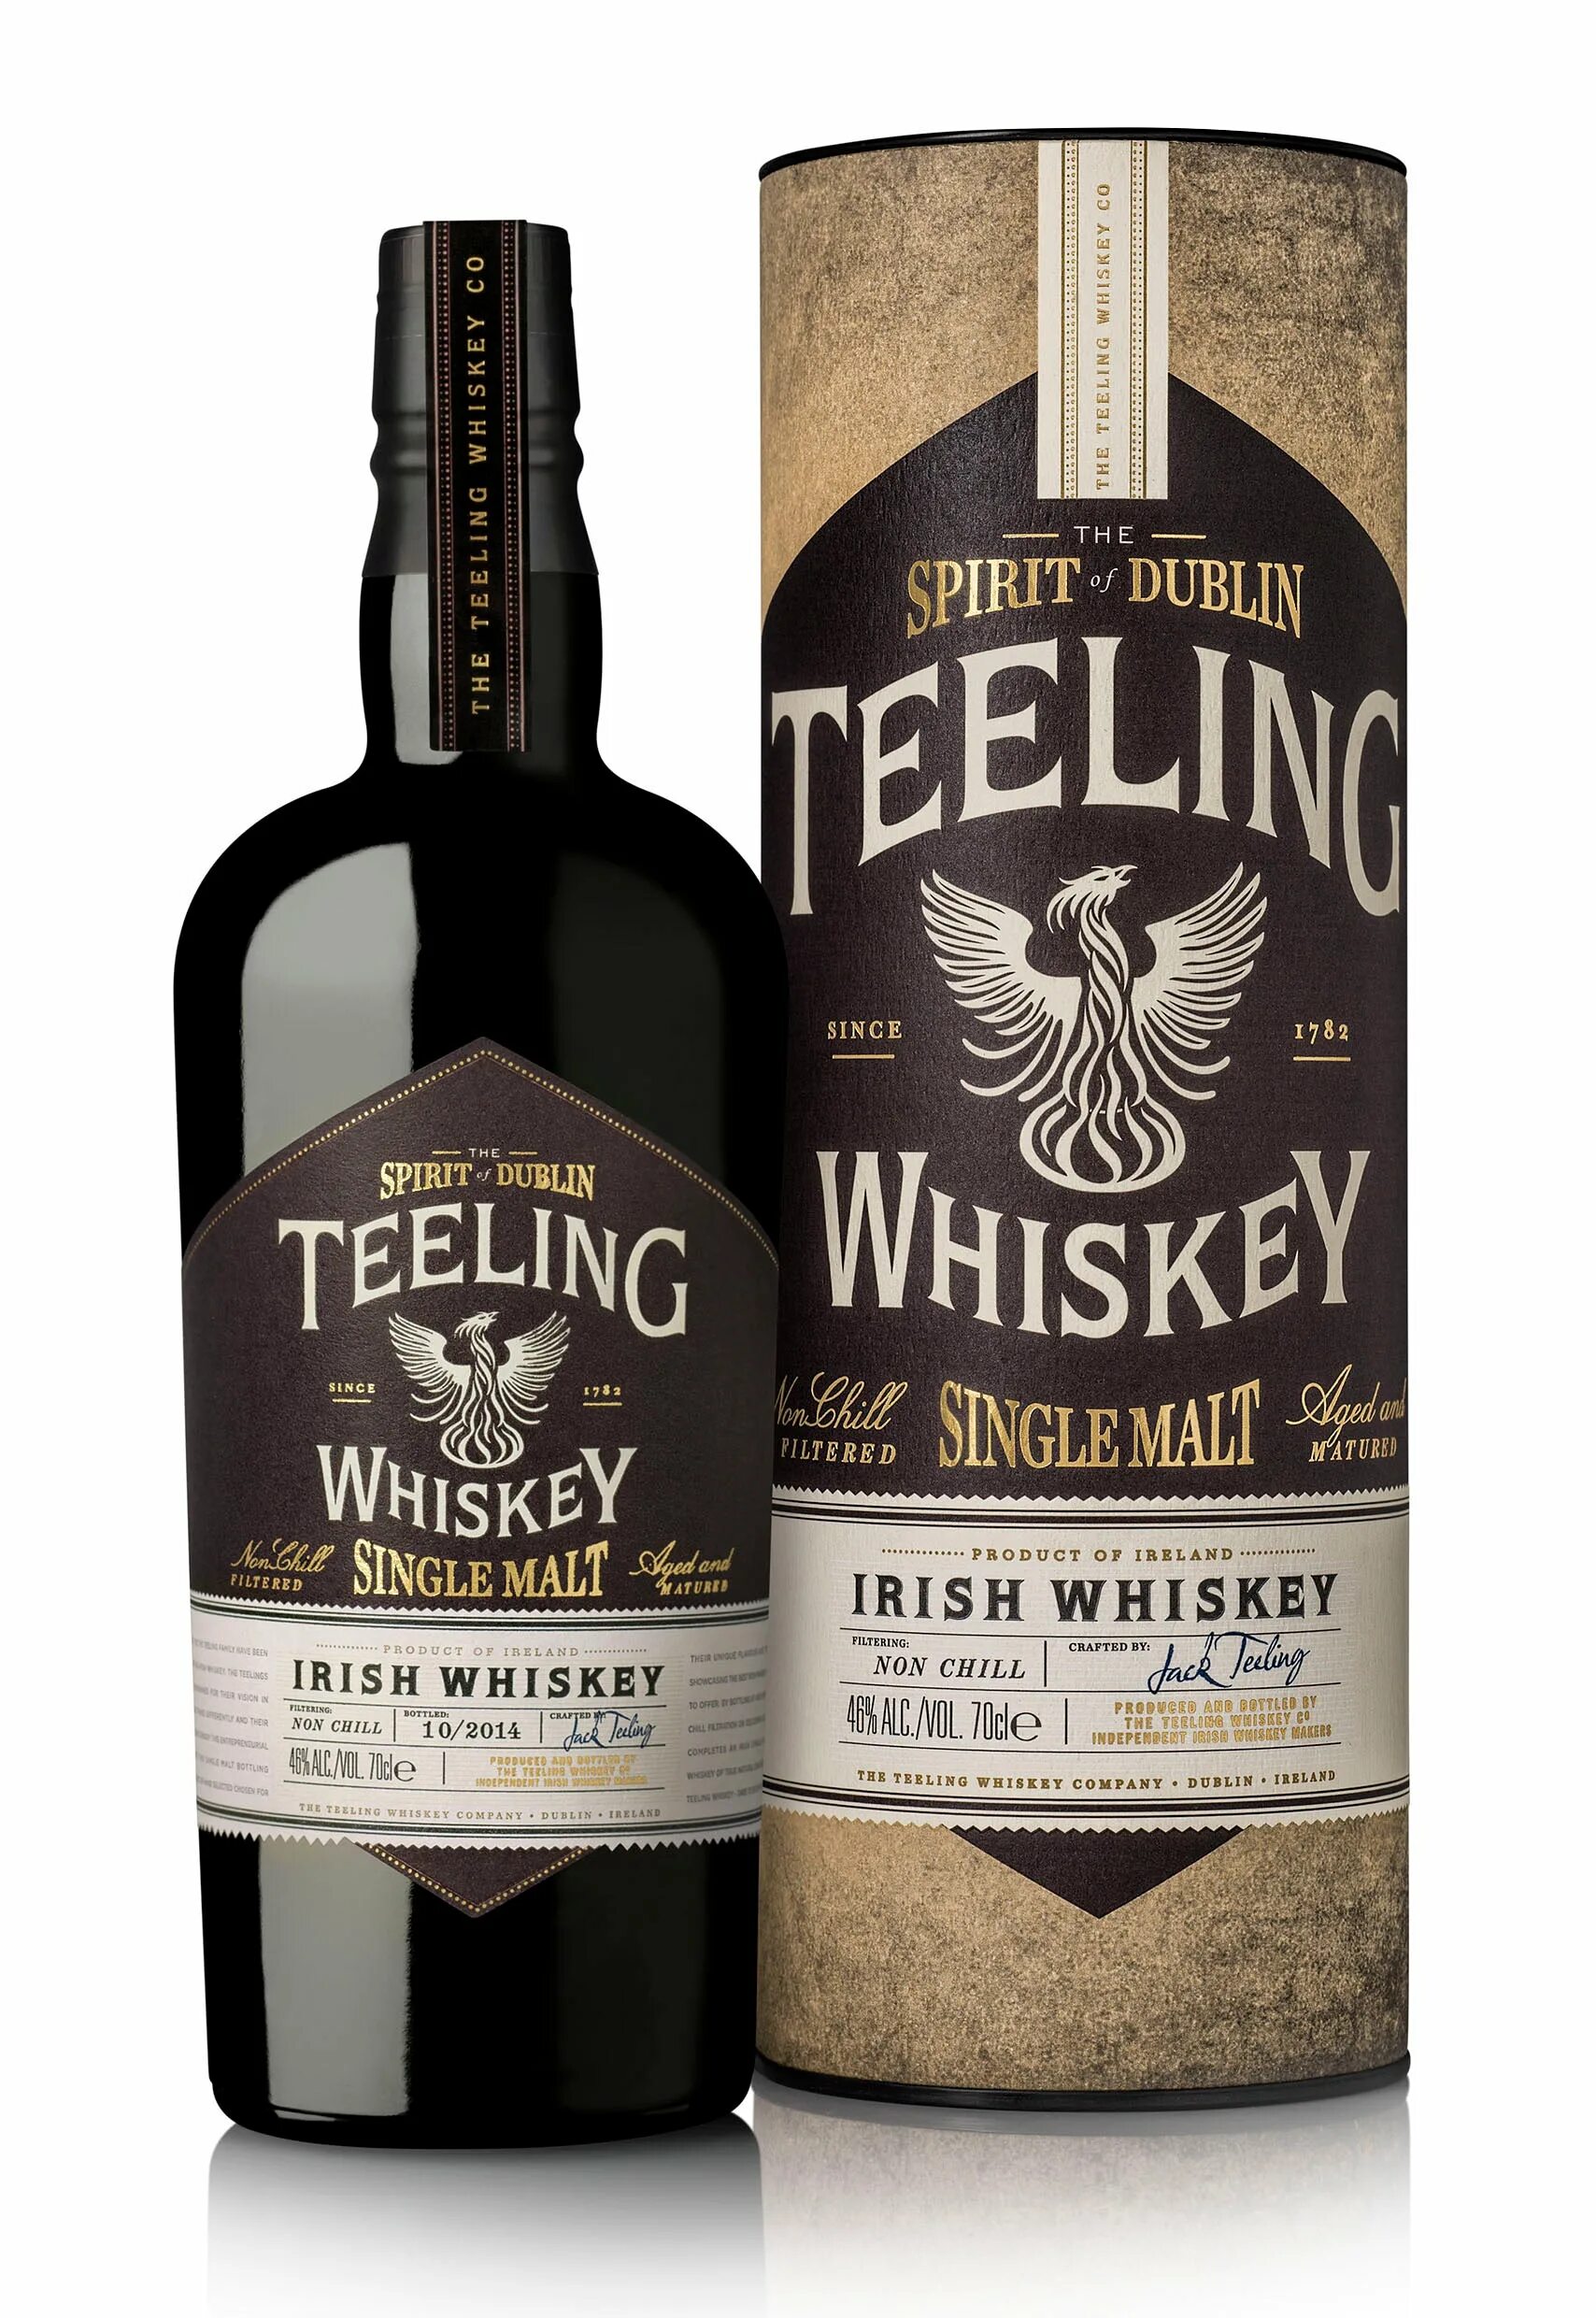 Виски Teeling Irish Whiskey. Single Malt виски Irish Whiskey. Сингл Молт Тилинг. Тилинг виски 0.7.